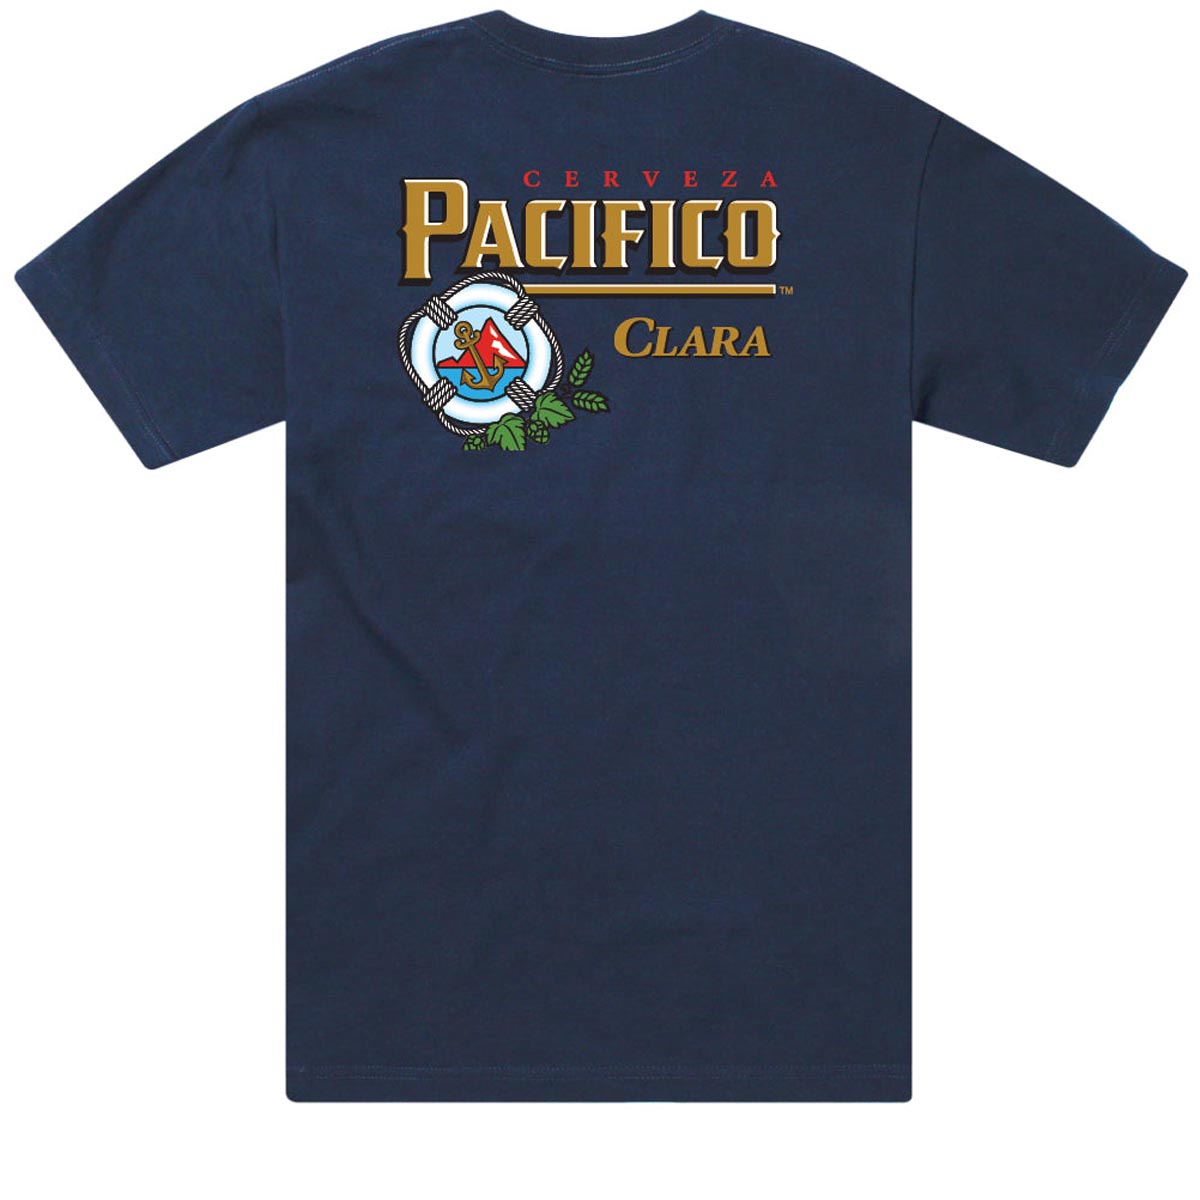 Lakai x Pacifico Cerveza T-Shirt - Navy image 1